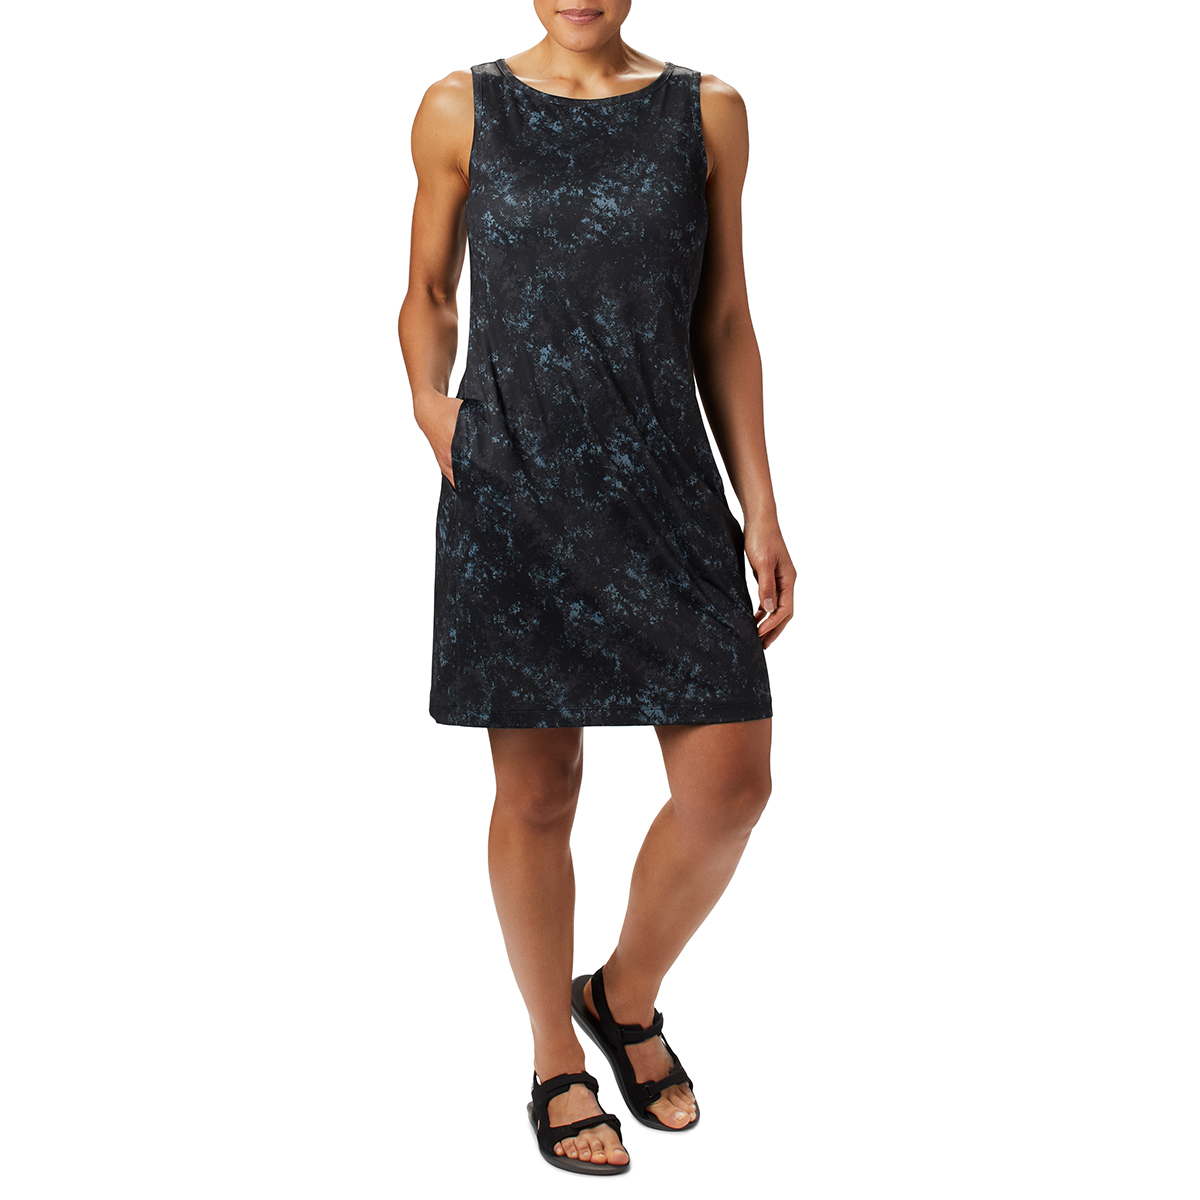 Columbia Women's Chill River Printed Dress - Black, XL